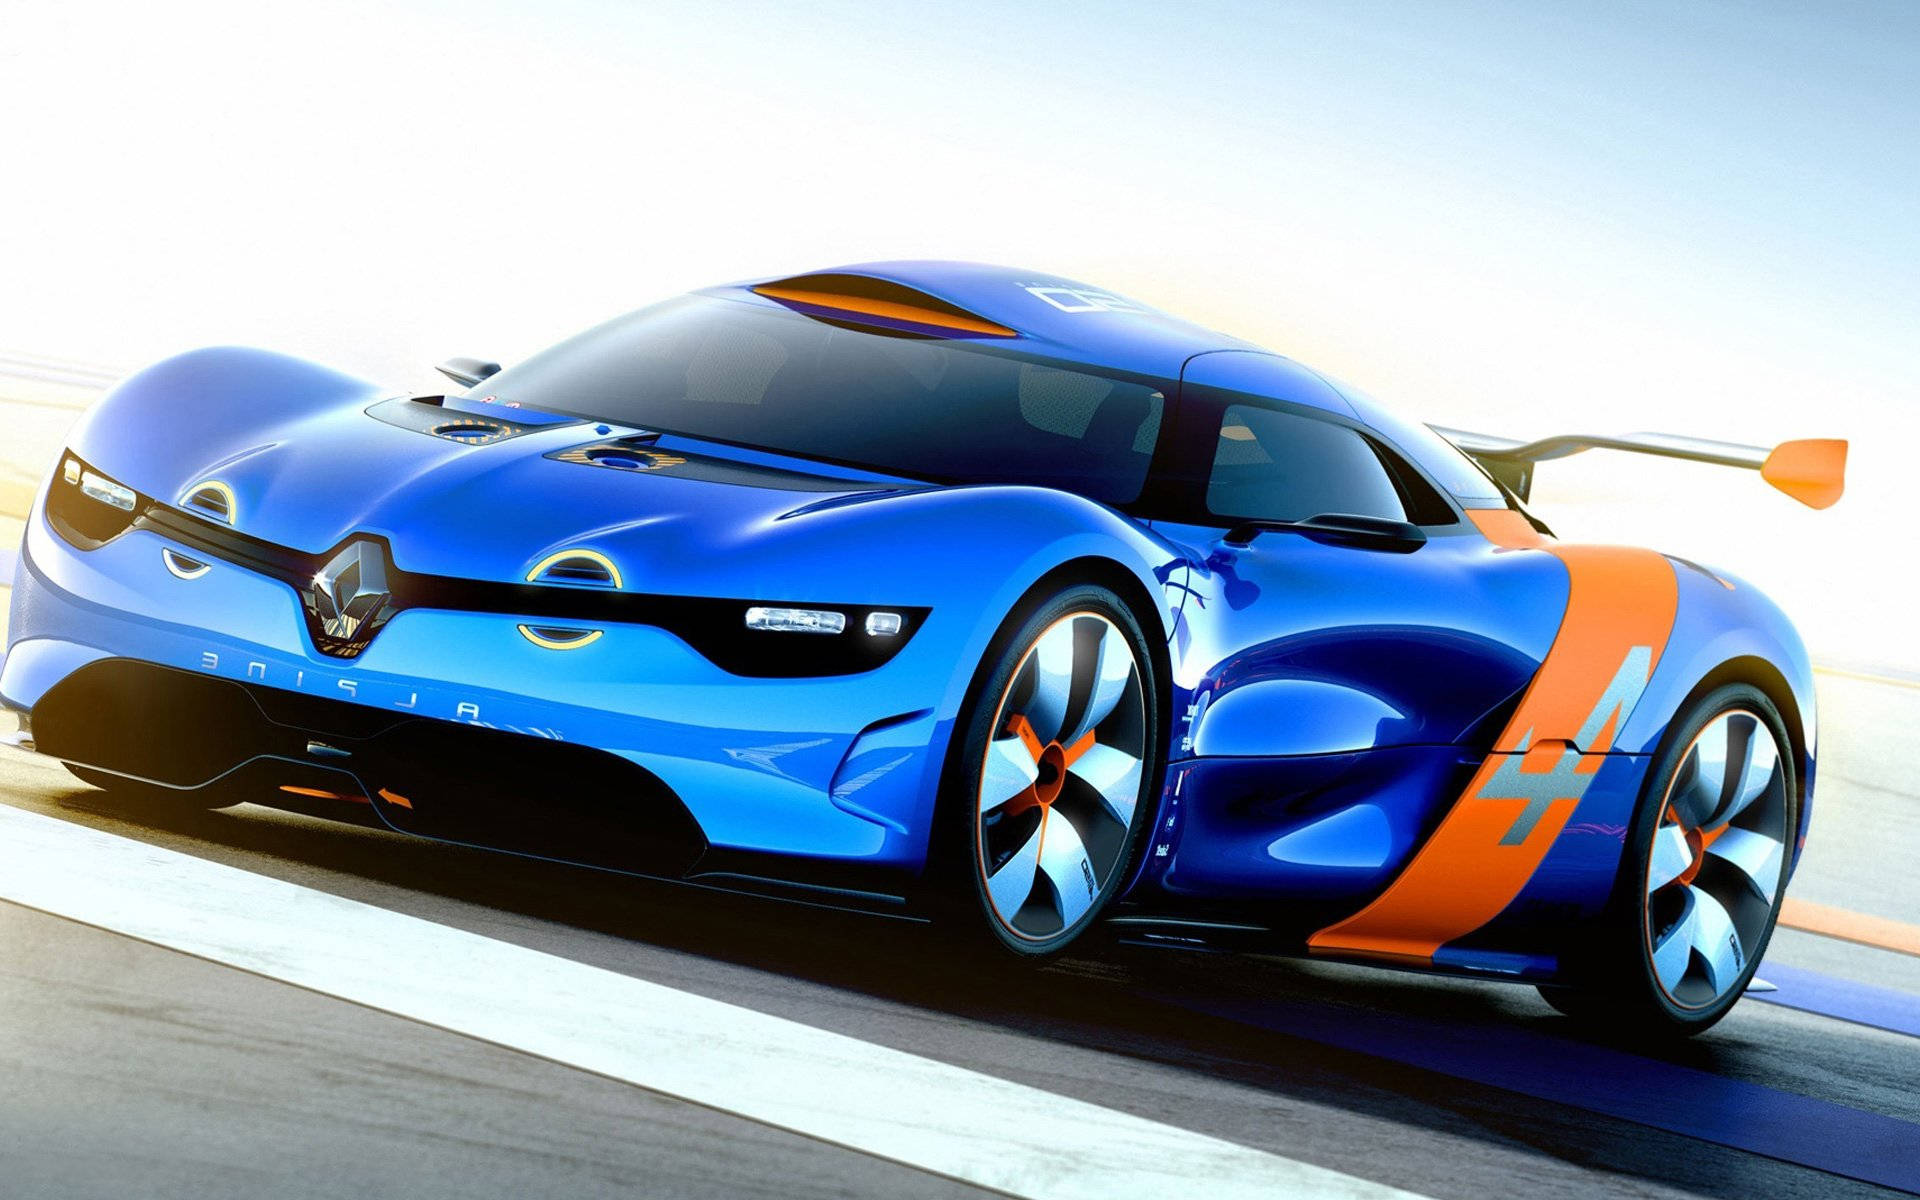 "Stunning Blue Sports Car - Alpine Speed on Display" Wallpaper